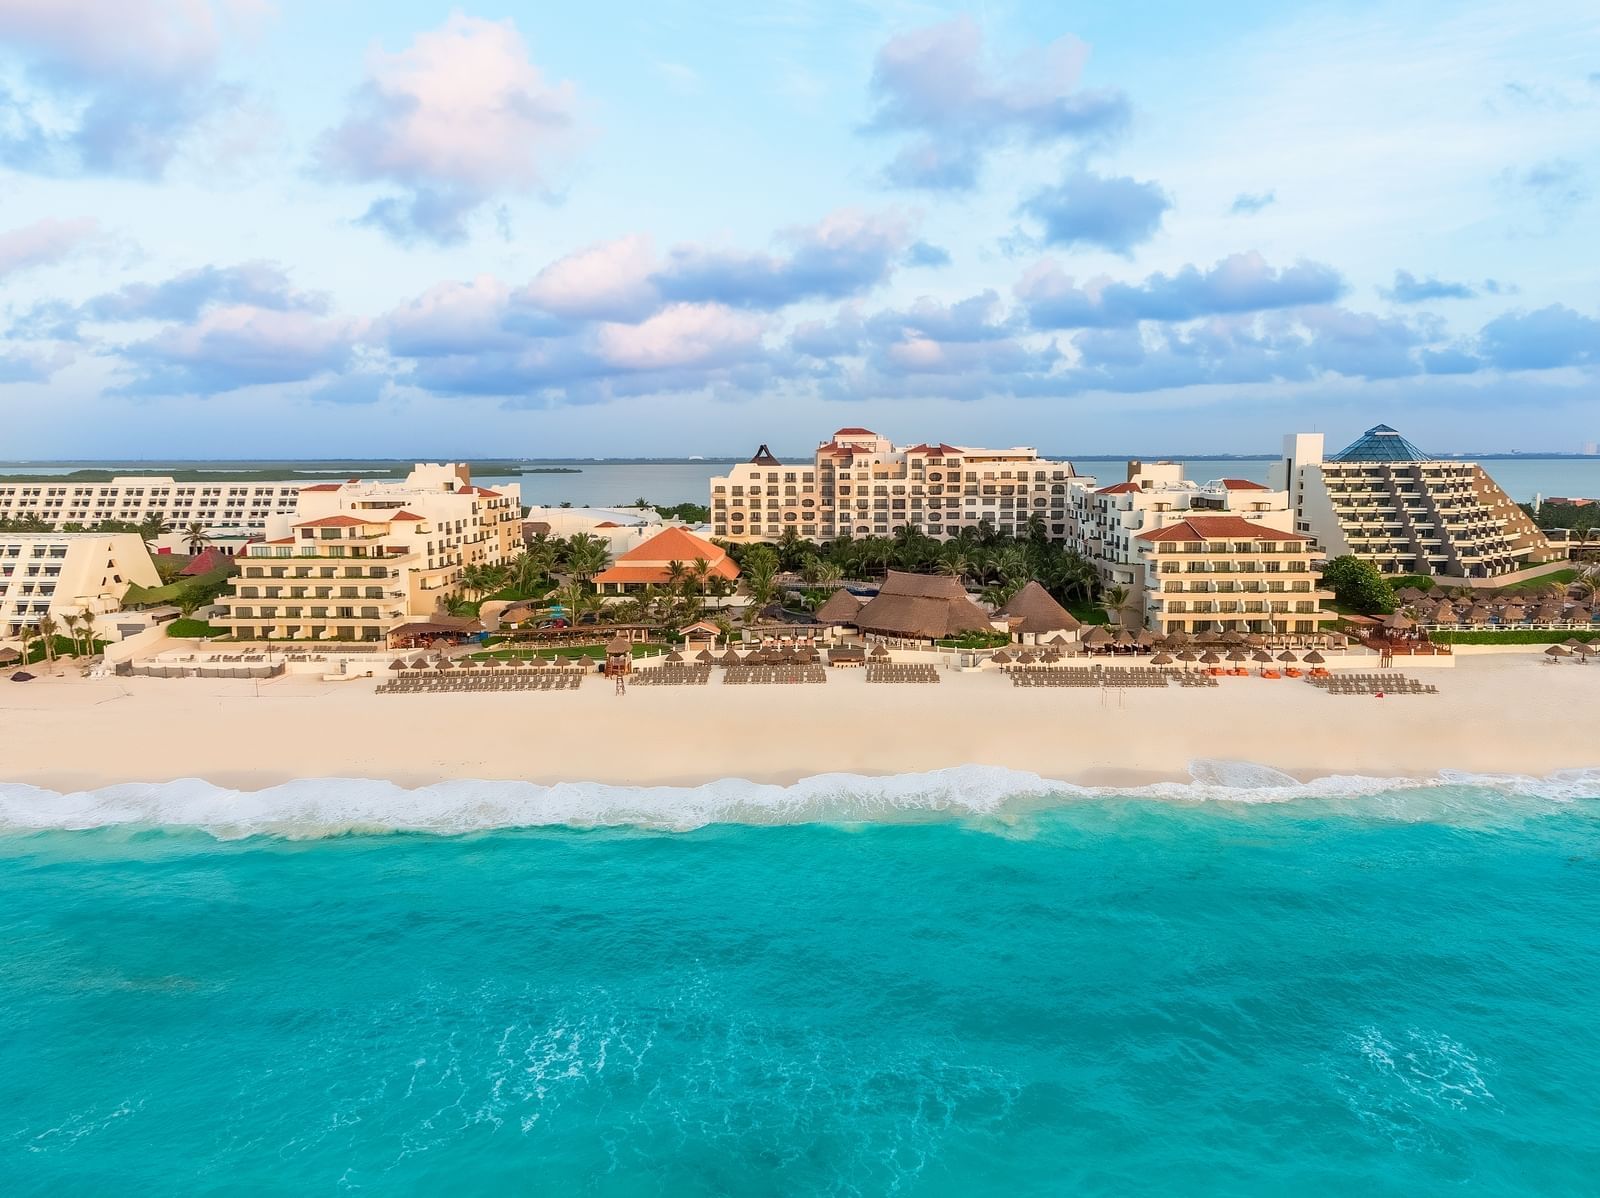 Vista lejana de una playa con Fiesta Americana Hotels & Resorts